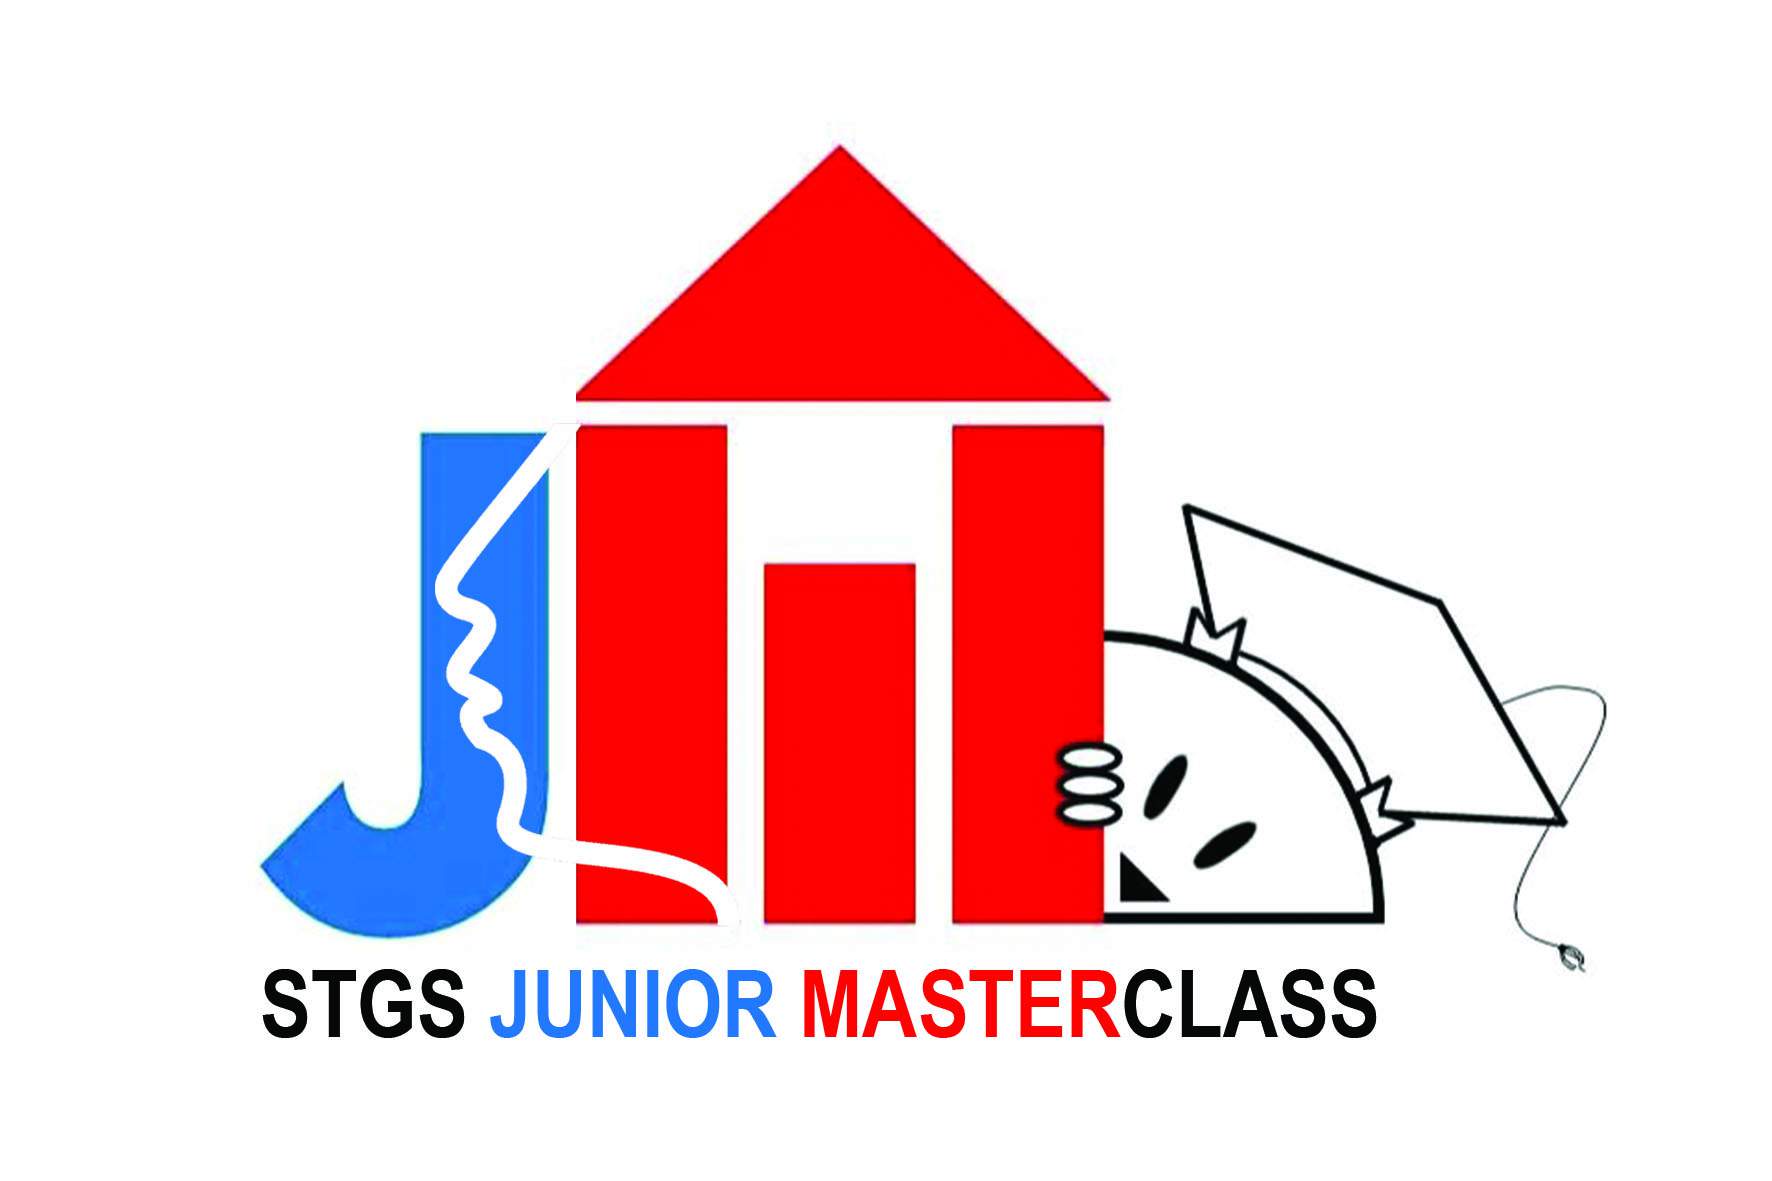 Junior Masterclass: Young Entrepreneurs at School